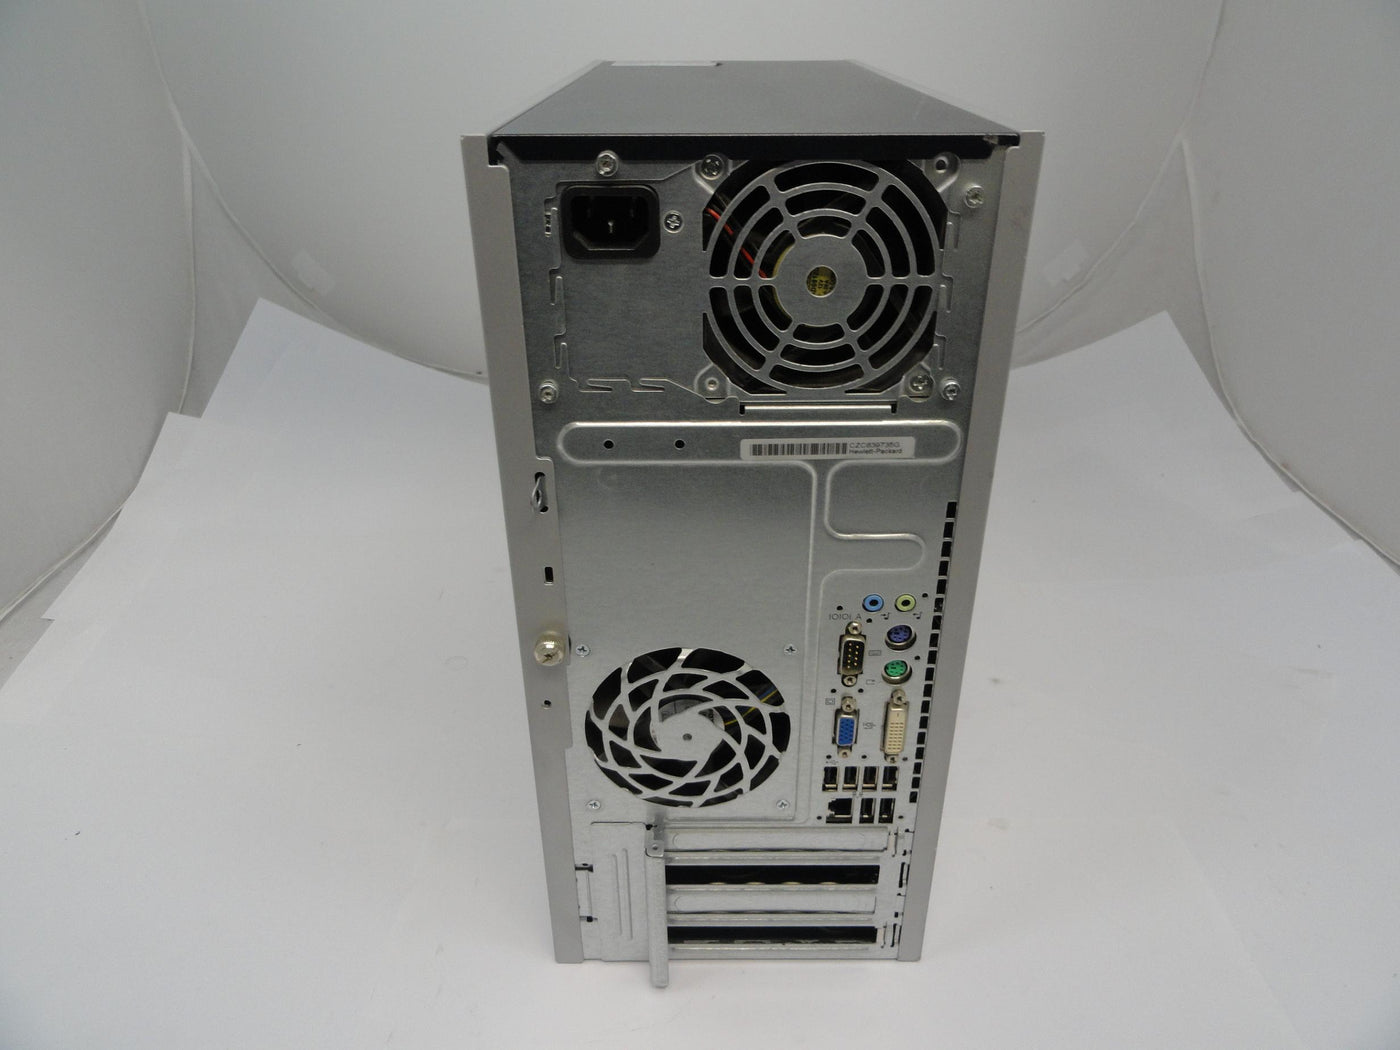 PR16341_KV377ET#ABU_HP DC5800 Microtower Computer - Image2